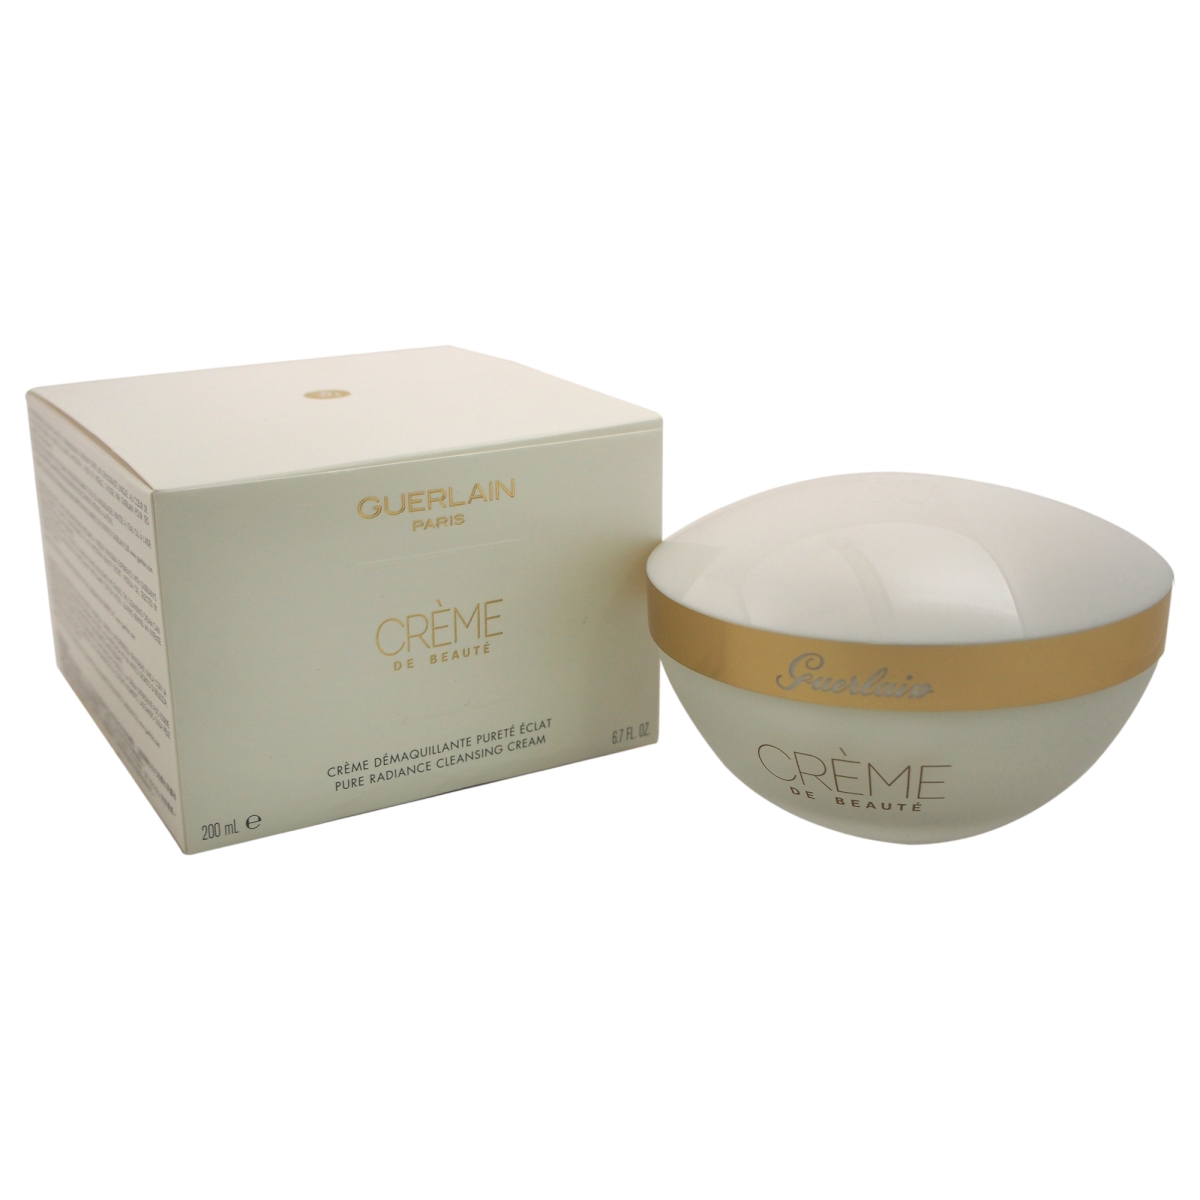 W-sc-3033 6.7 Oz Creme De Beaute Cleansing Cream For Women